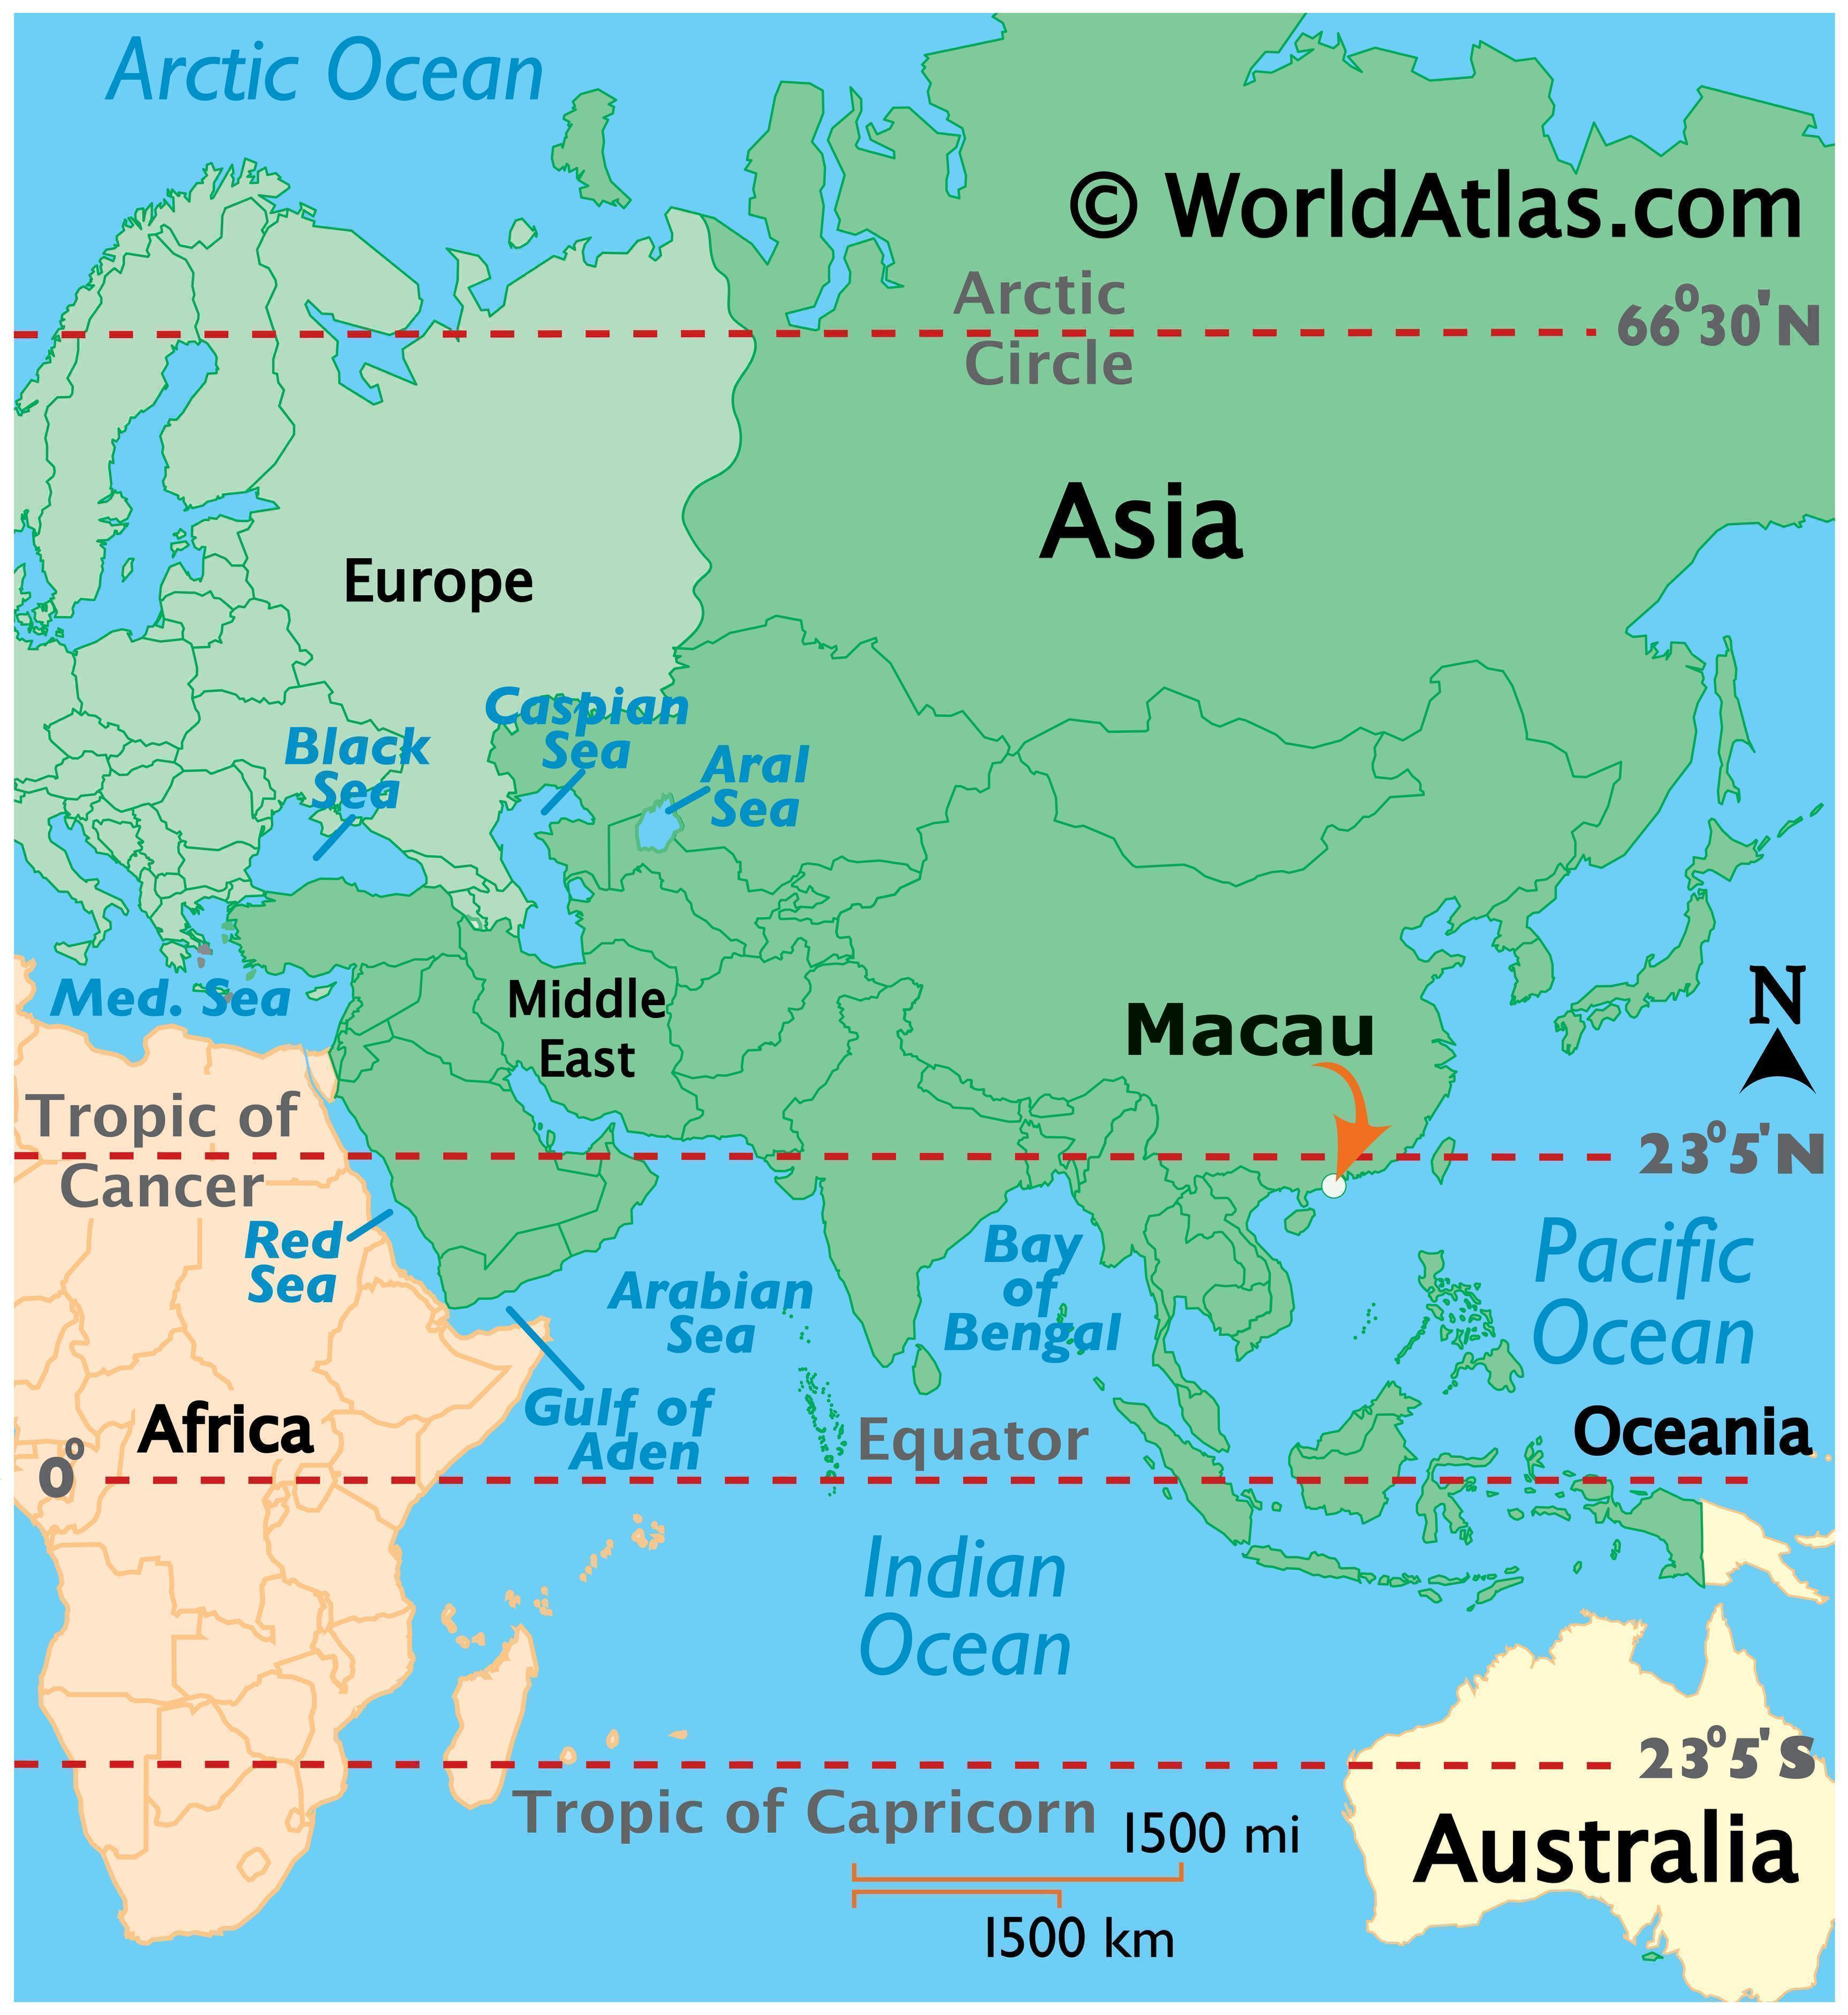 macau location on world map Macau Map Geography Of Macau Map Of Macau Worldatlas Com macau location on world map